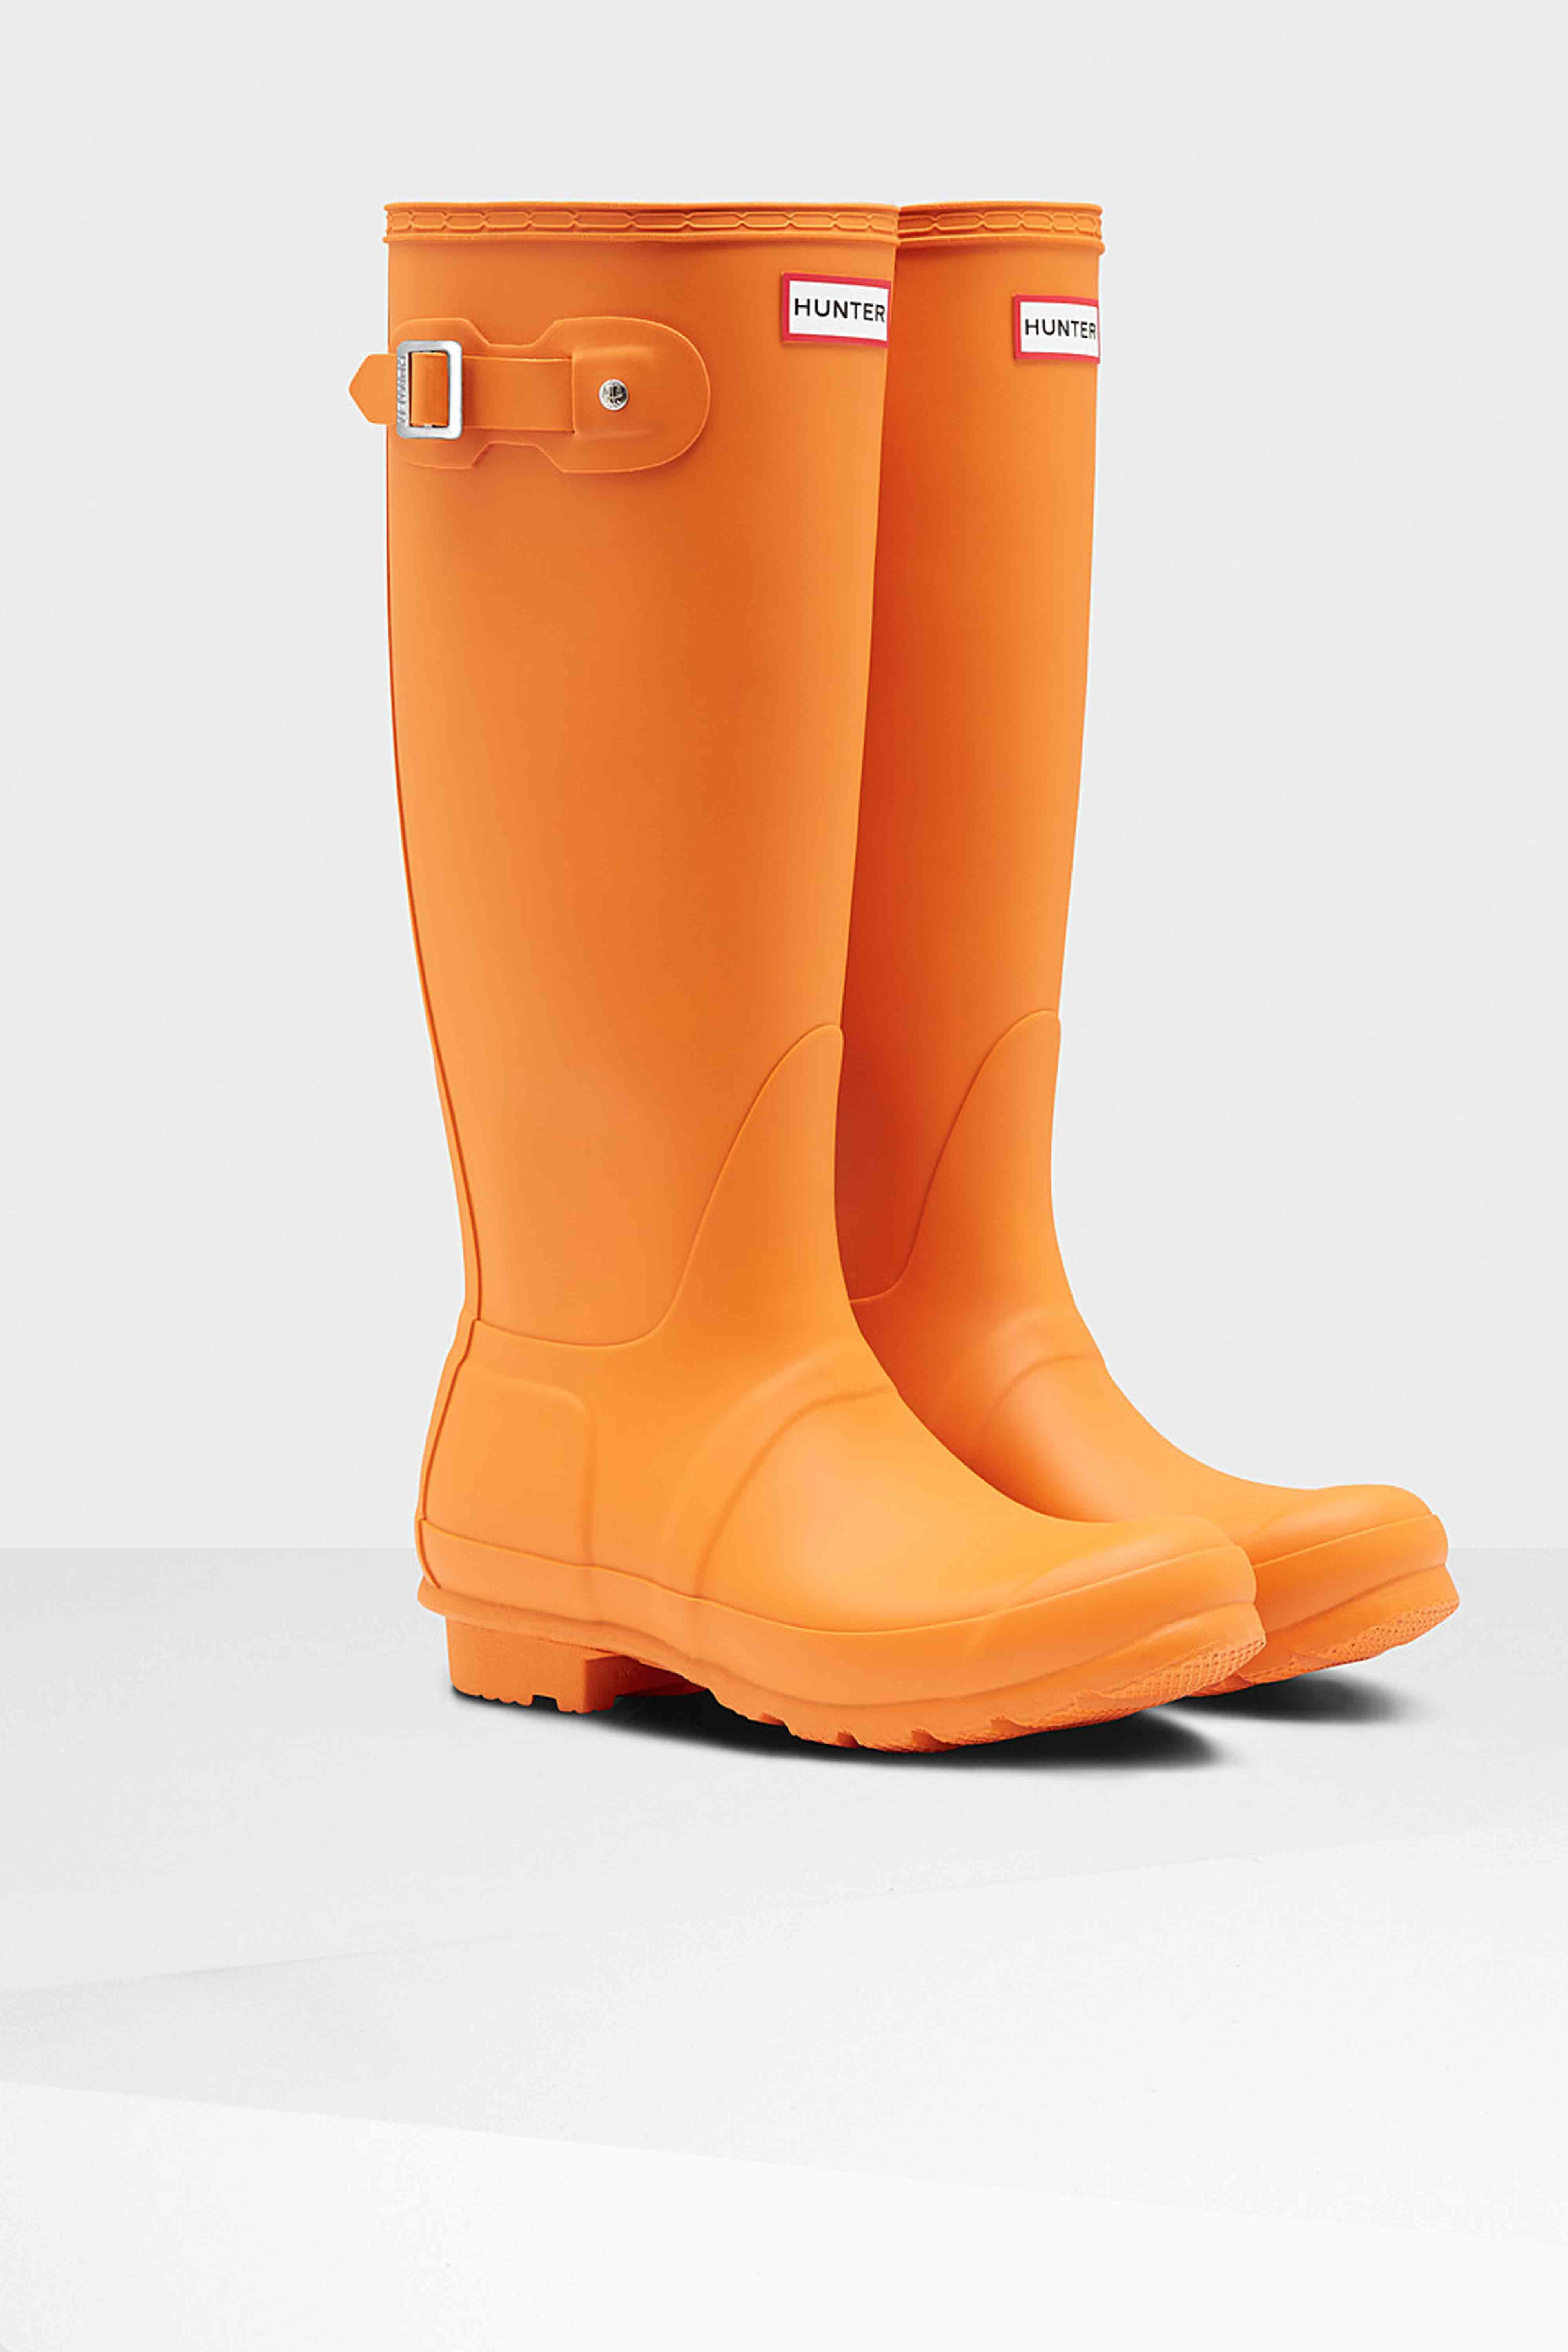 orange hunter boots